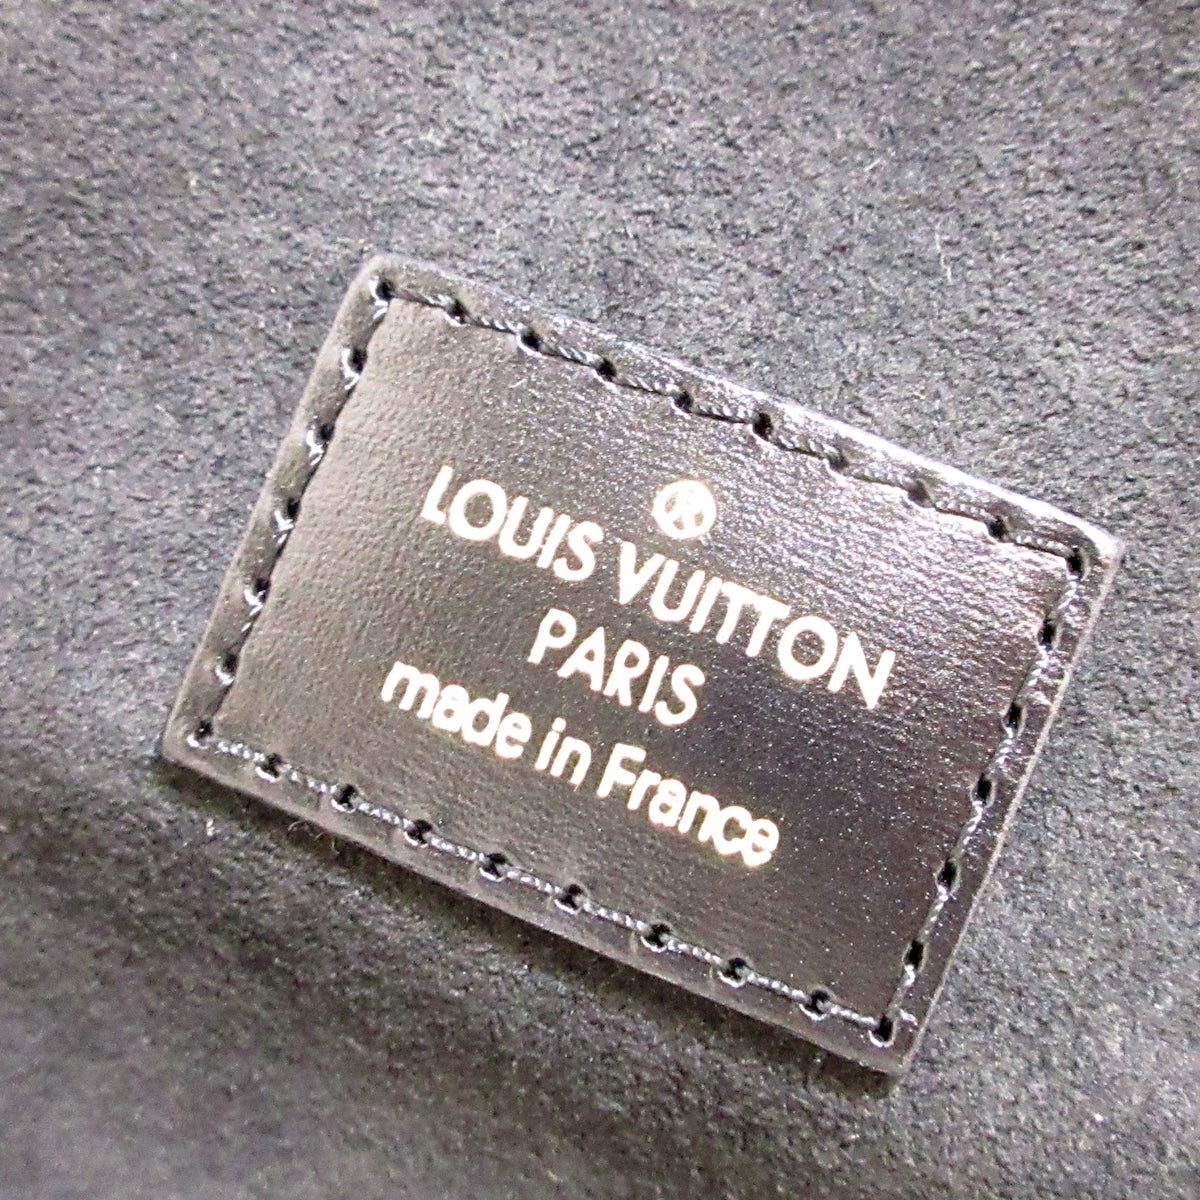 Louis Vuitton Vanity NV PM